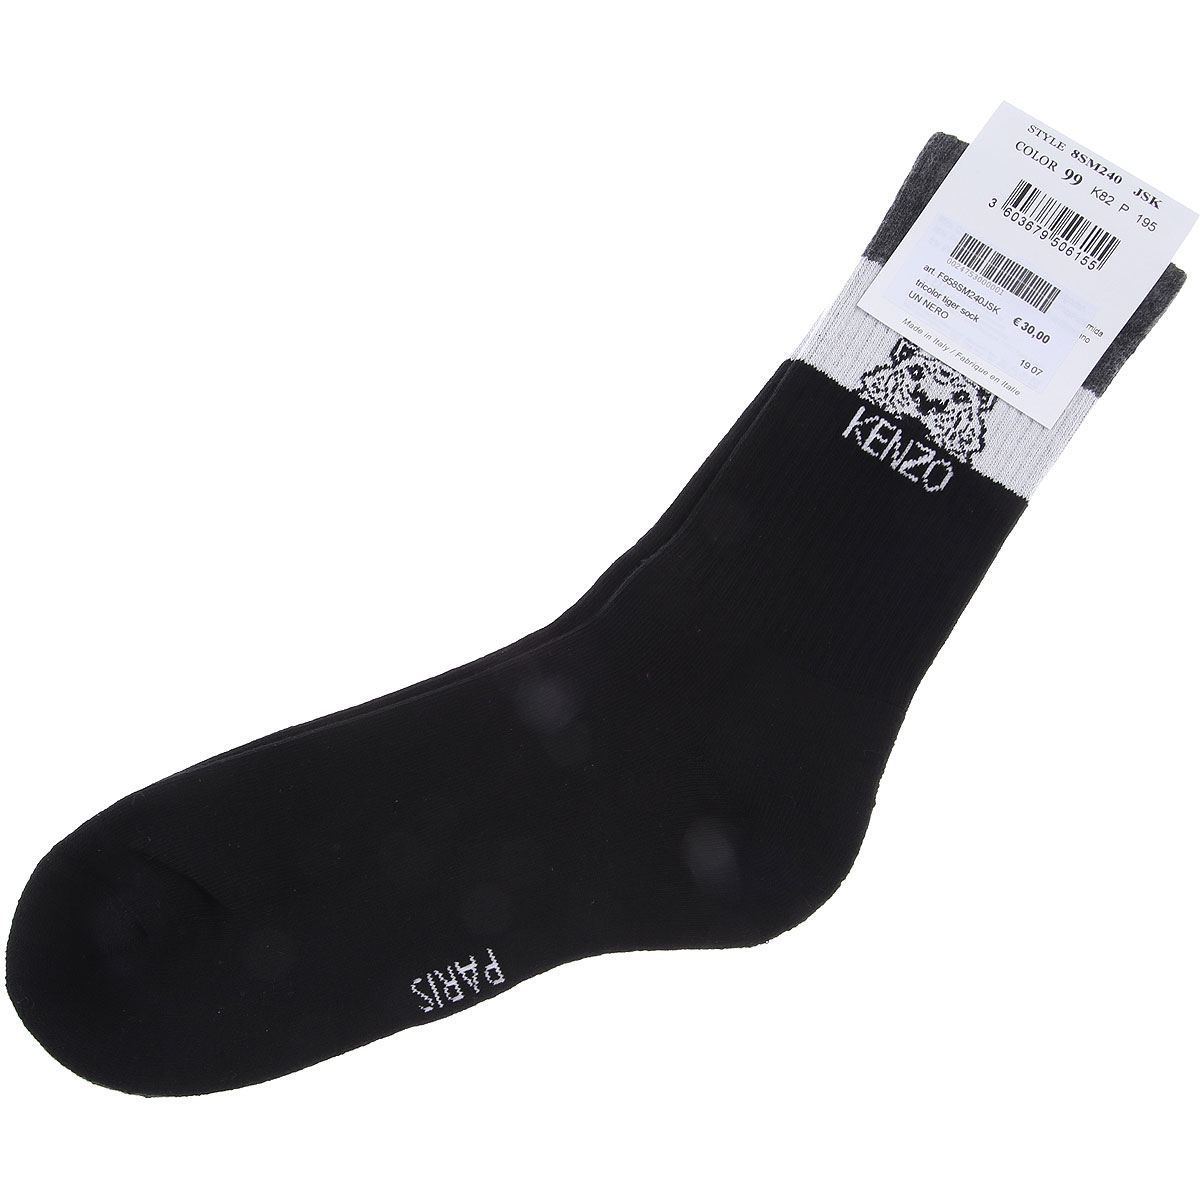 kenzo mens socks